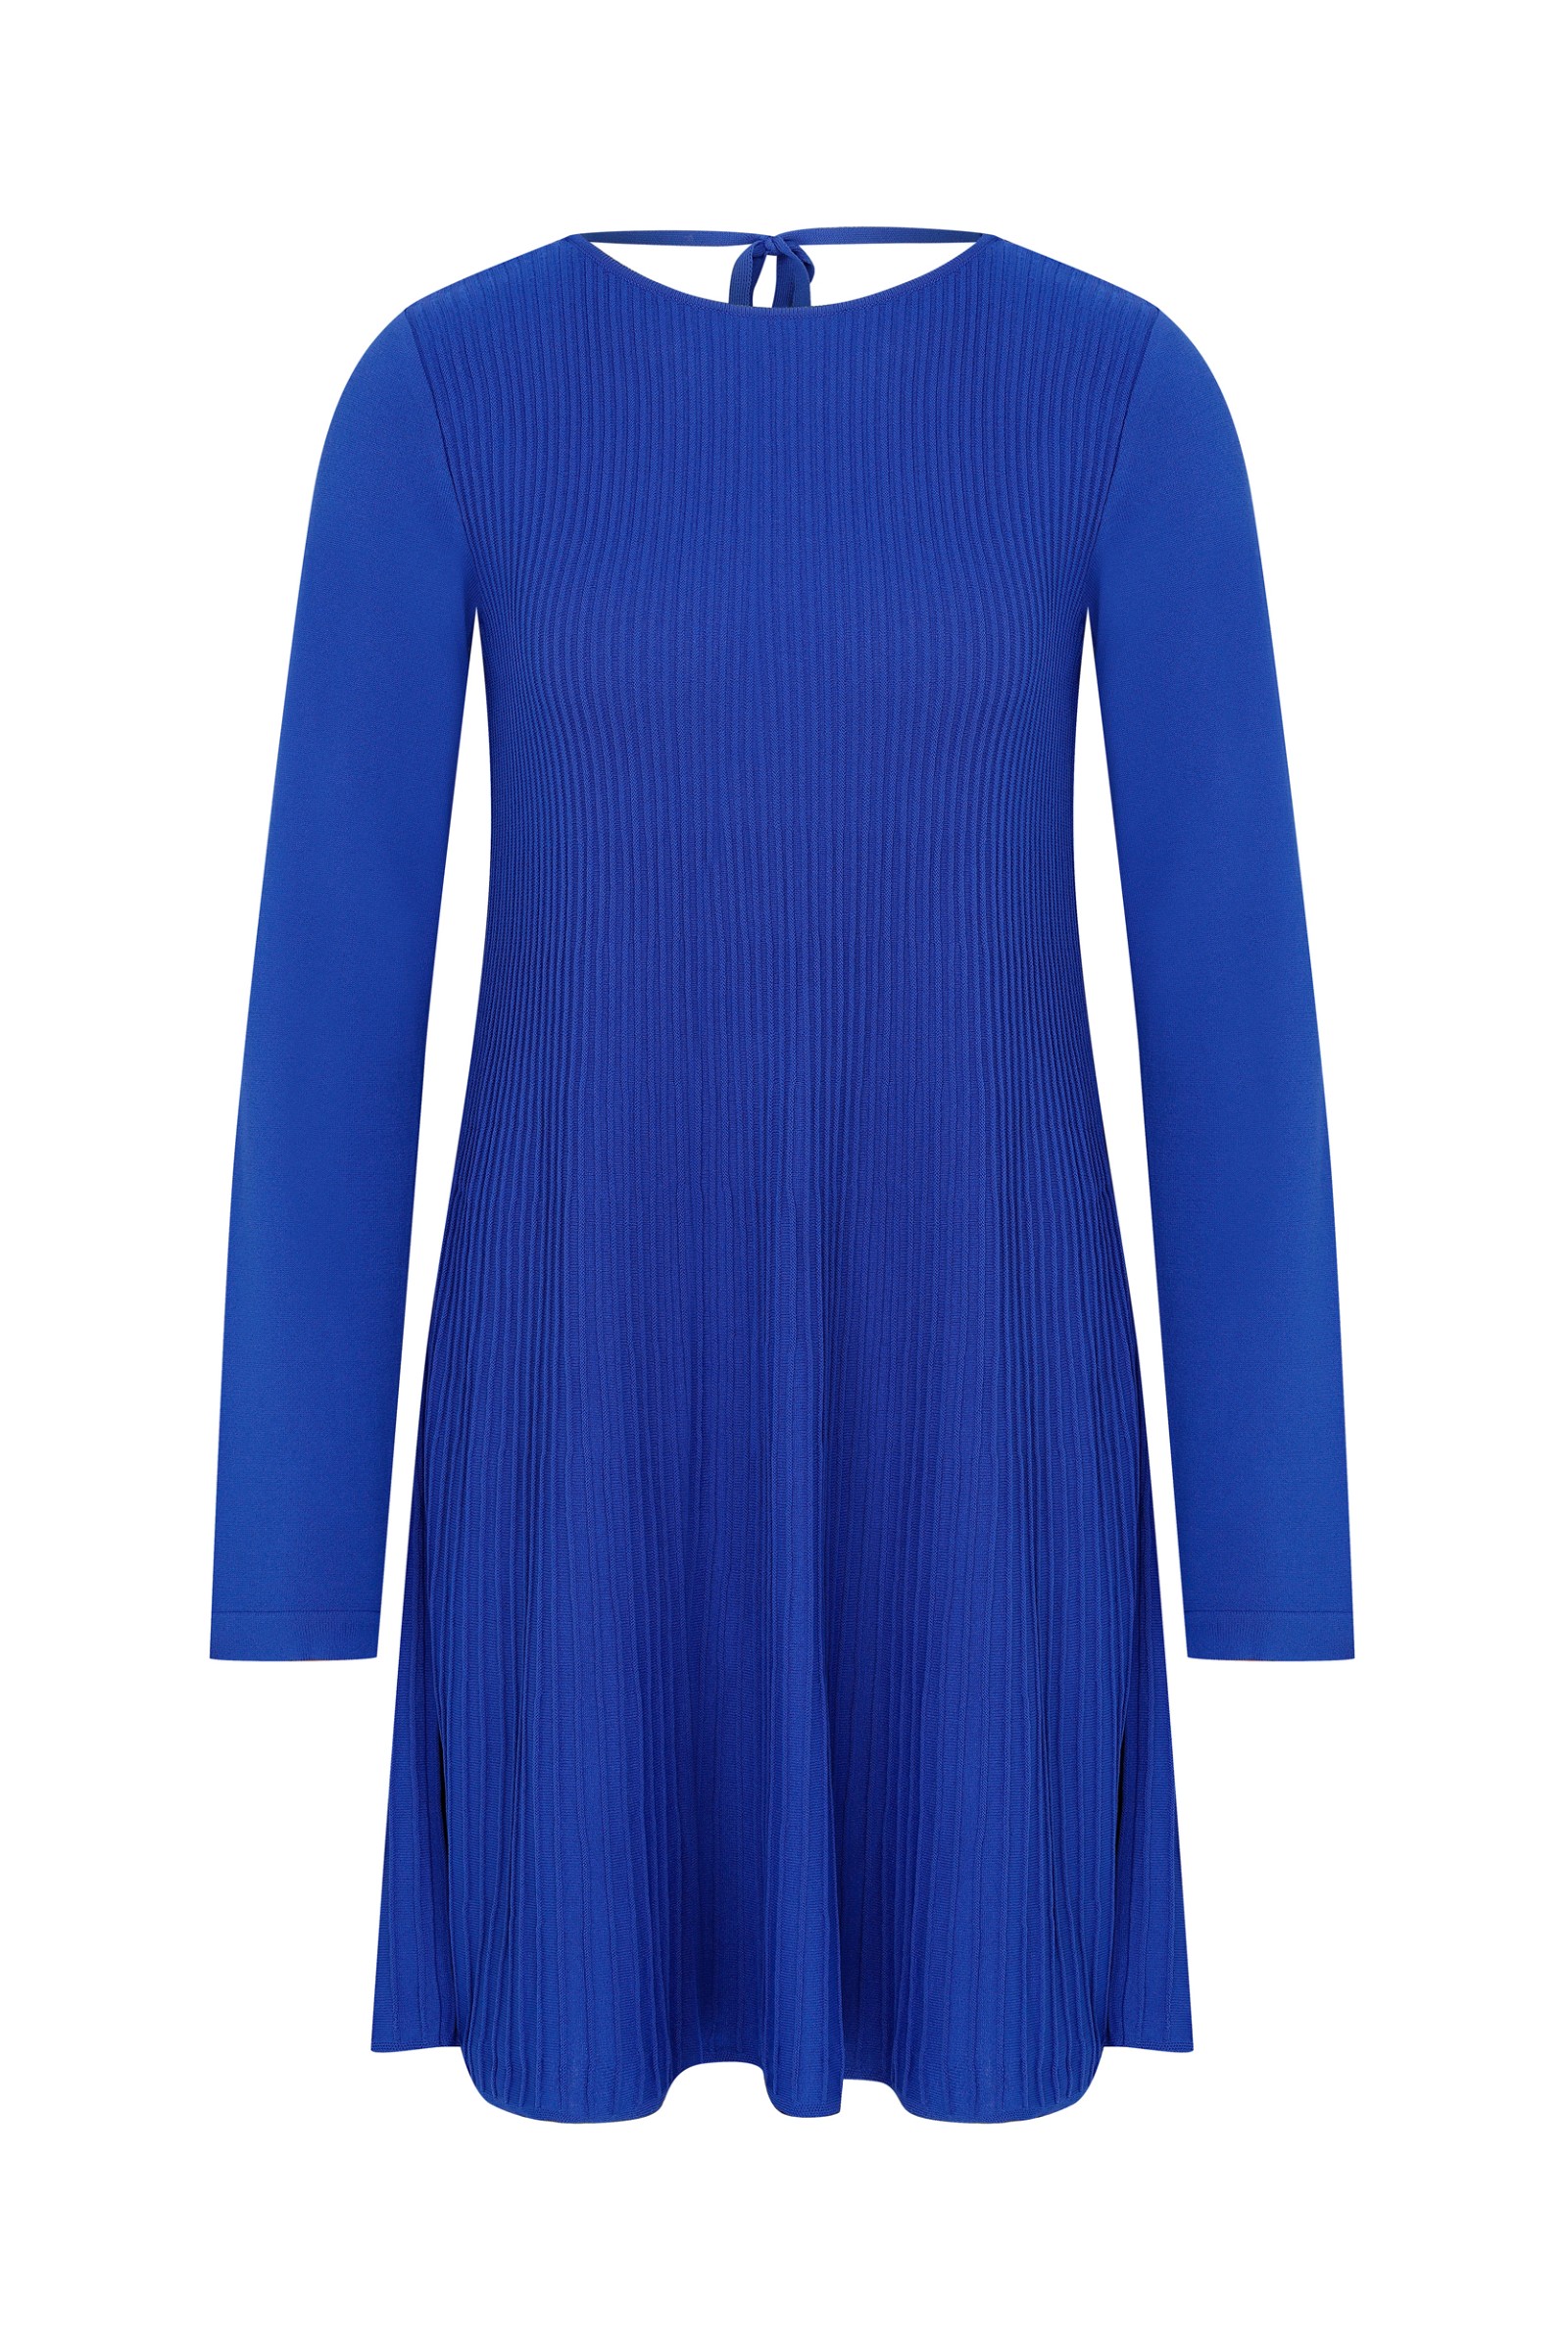 Lola Blue Knitted Dress 4